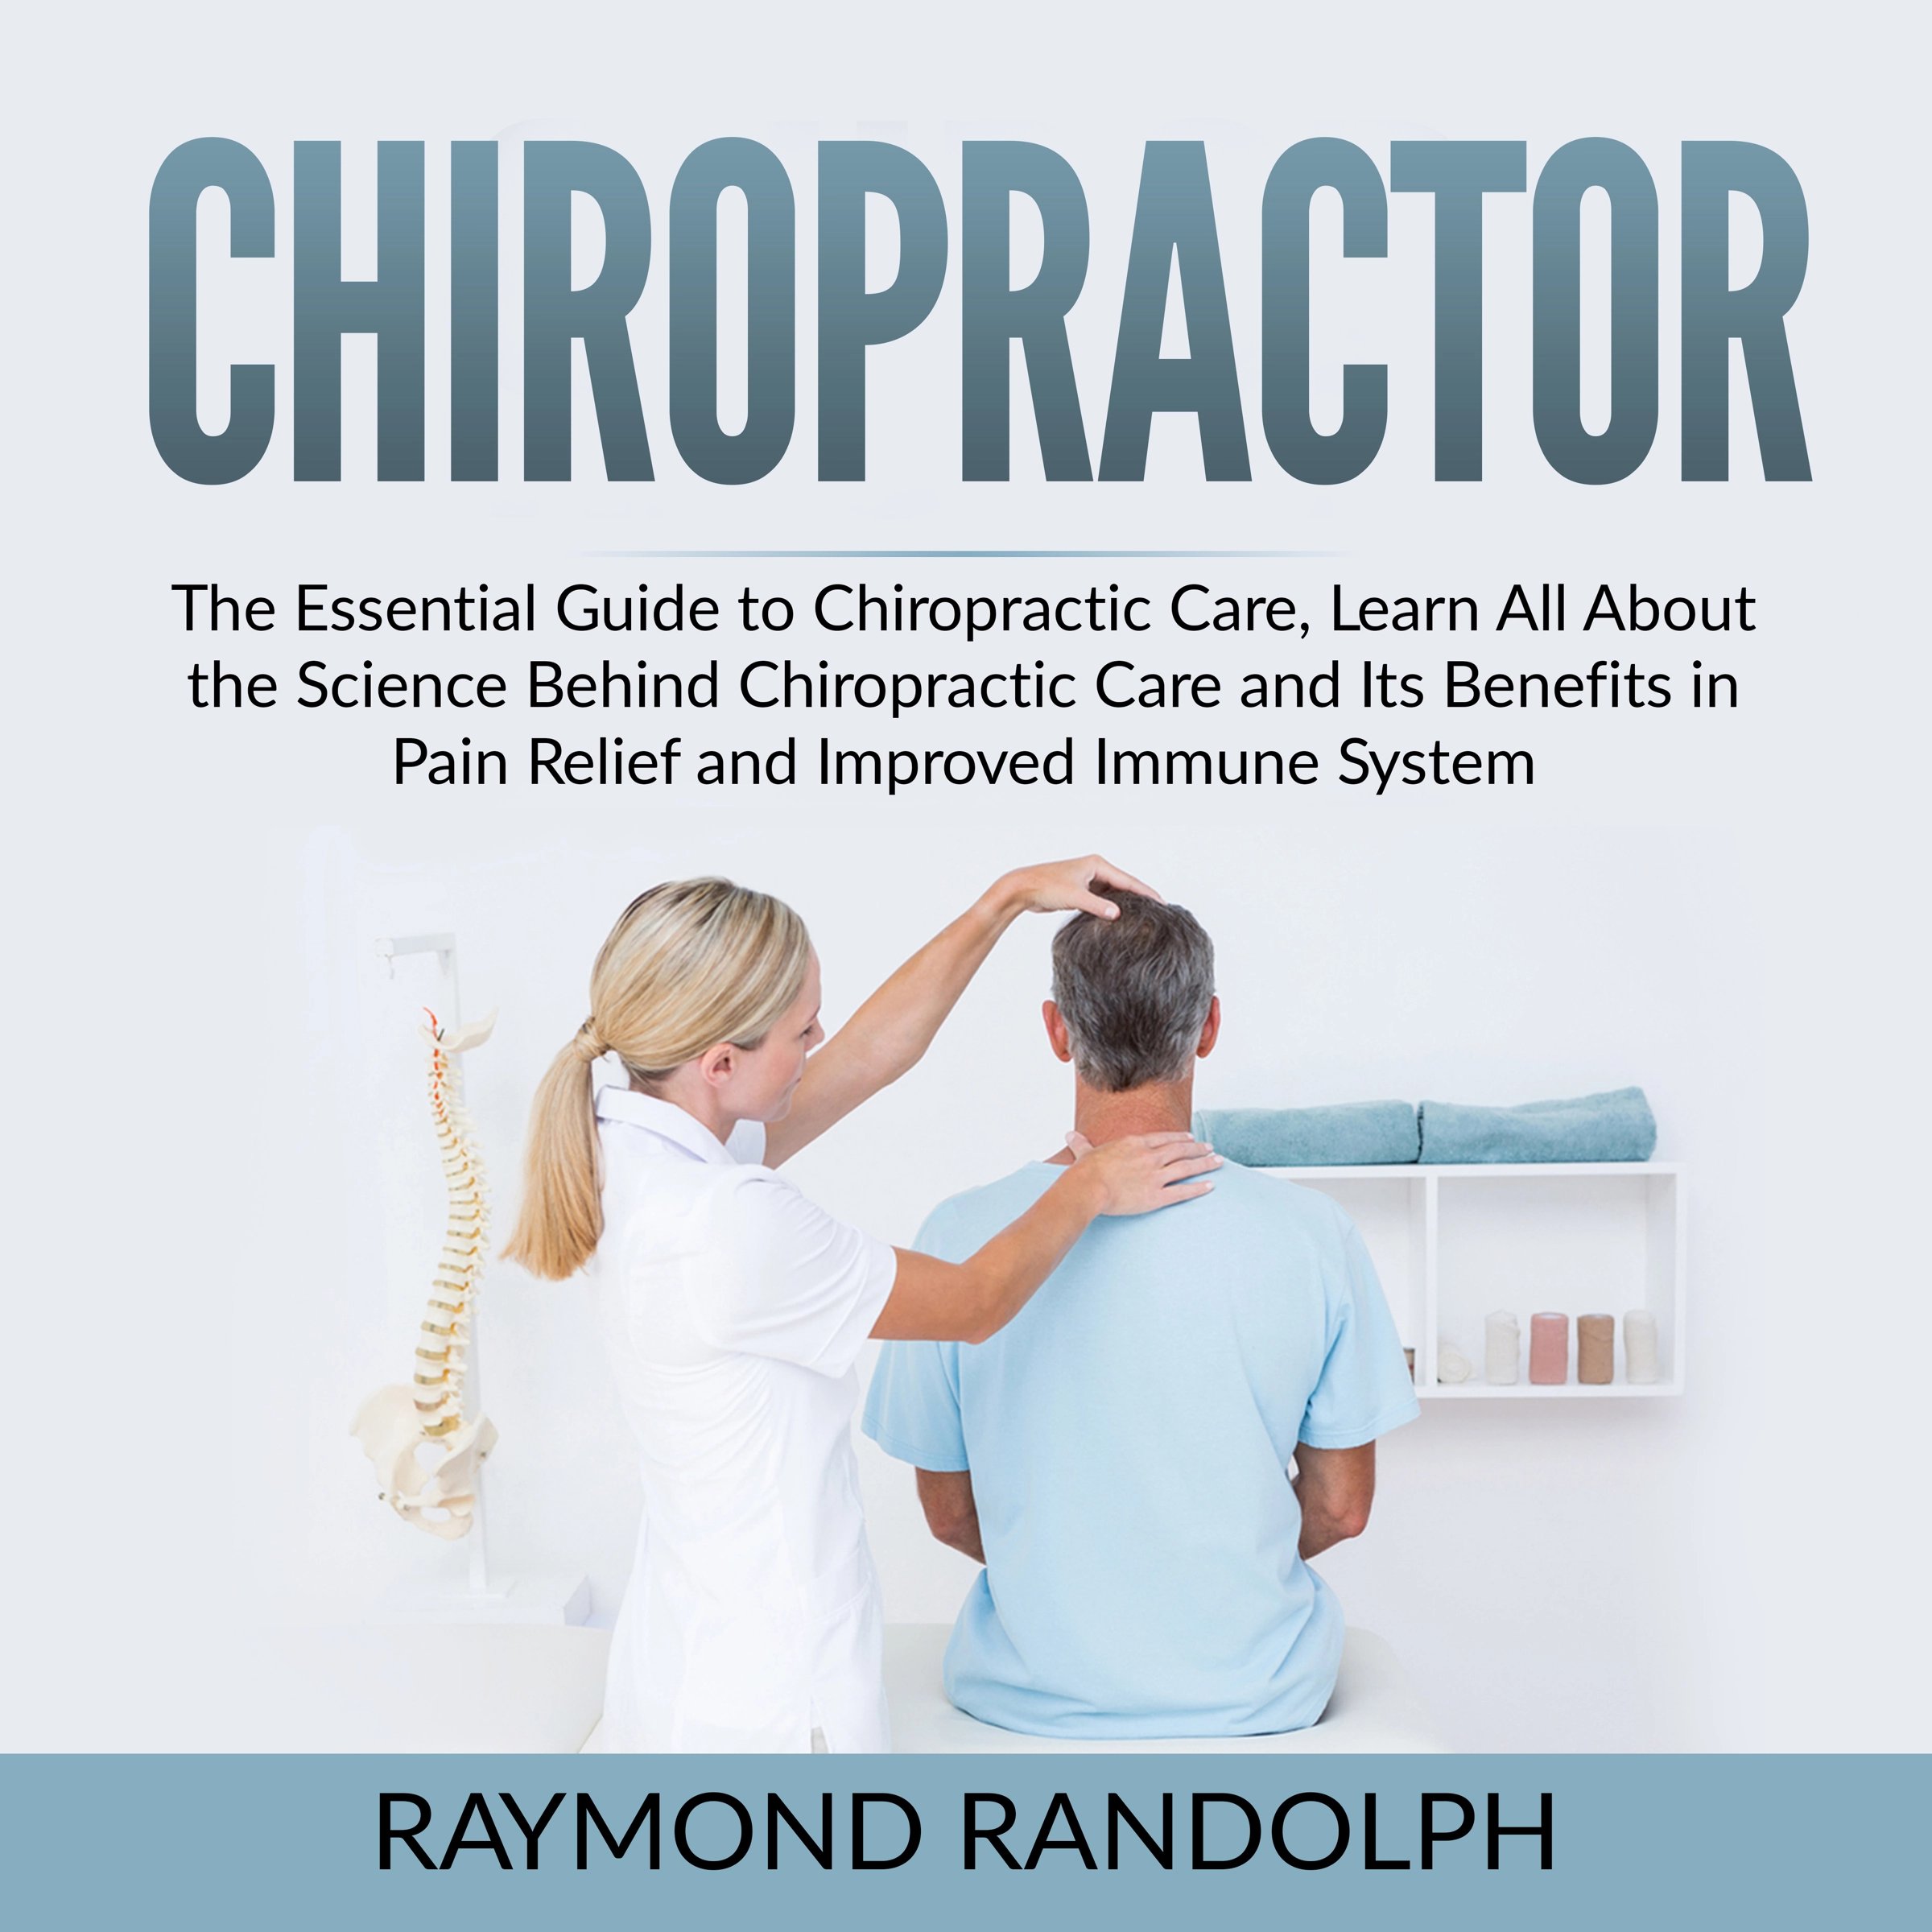 Chiropractor Audiobook by Raymond Randolph